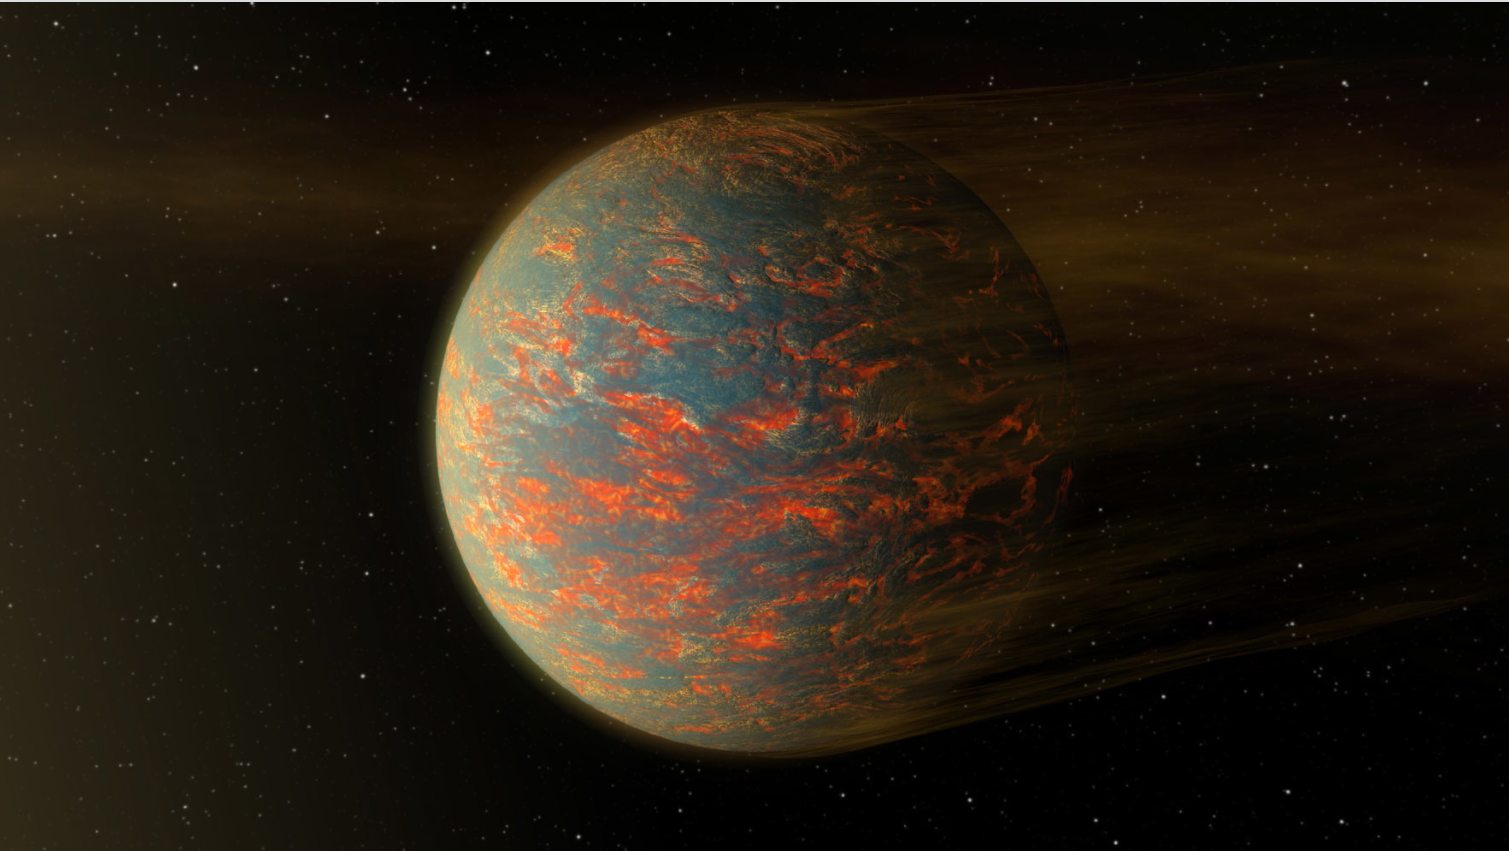 the exoplanet 55 Cancri e (artist's conception)